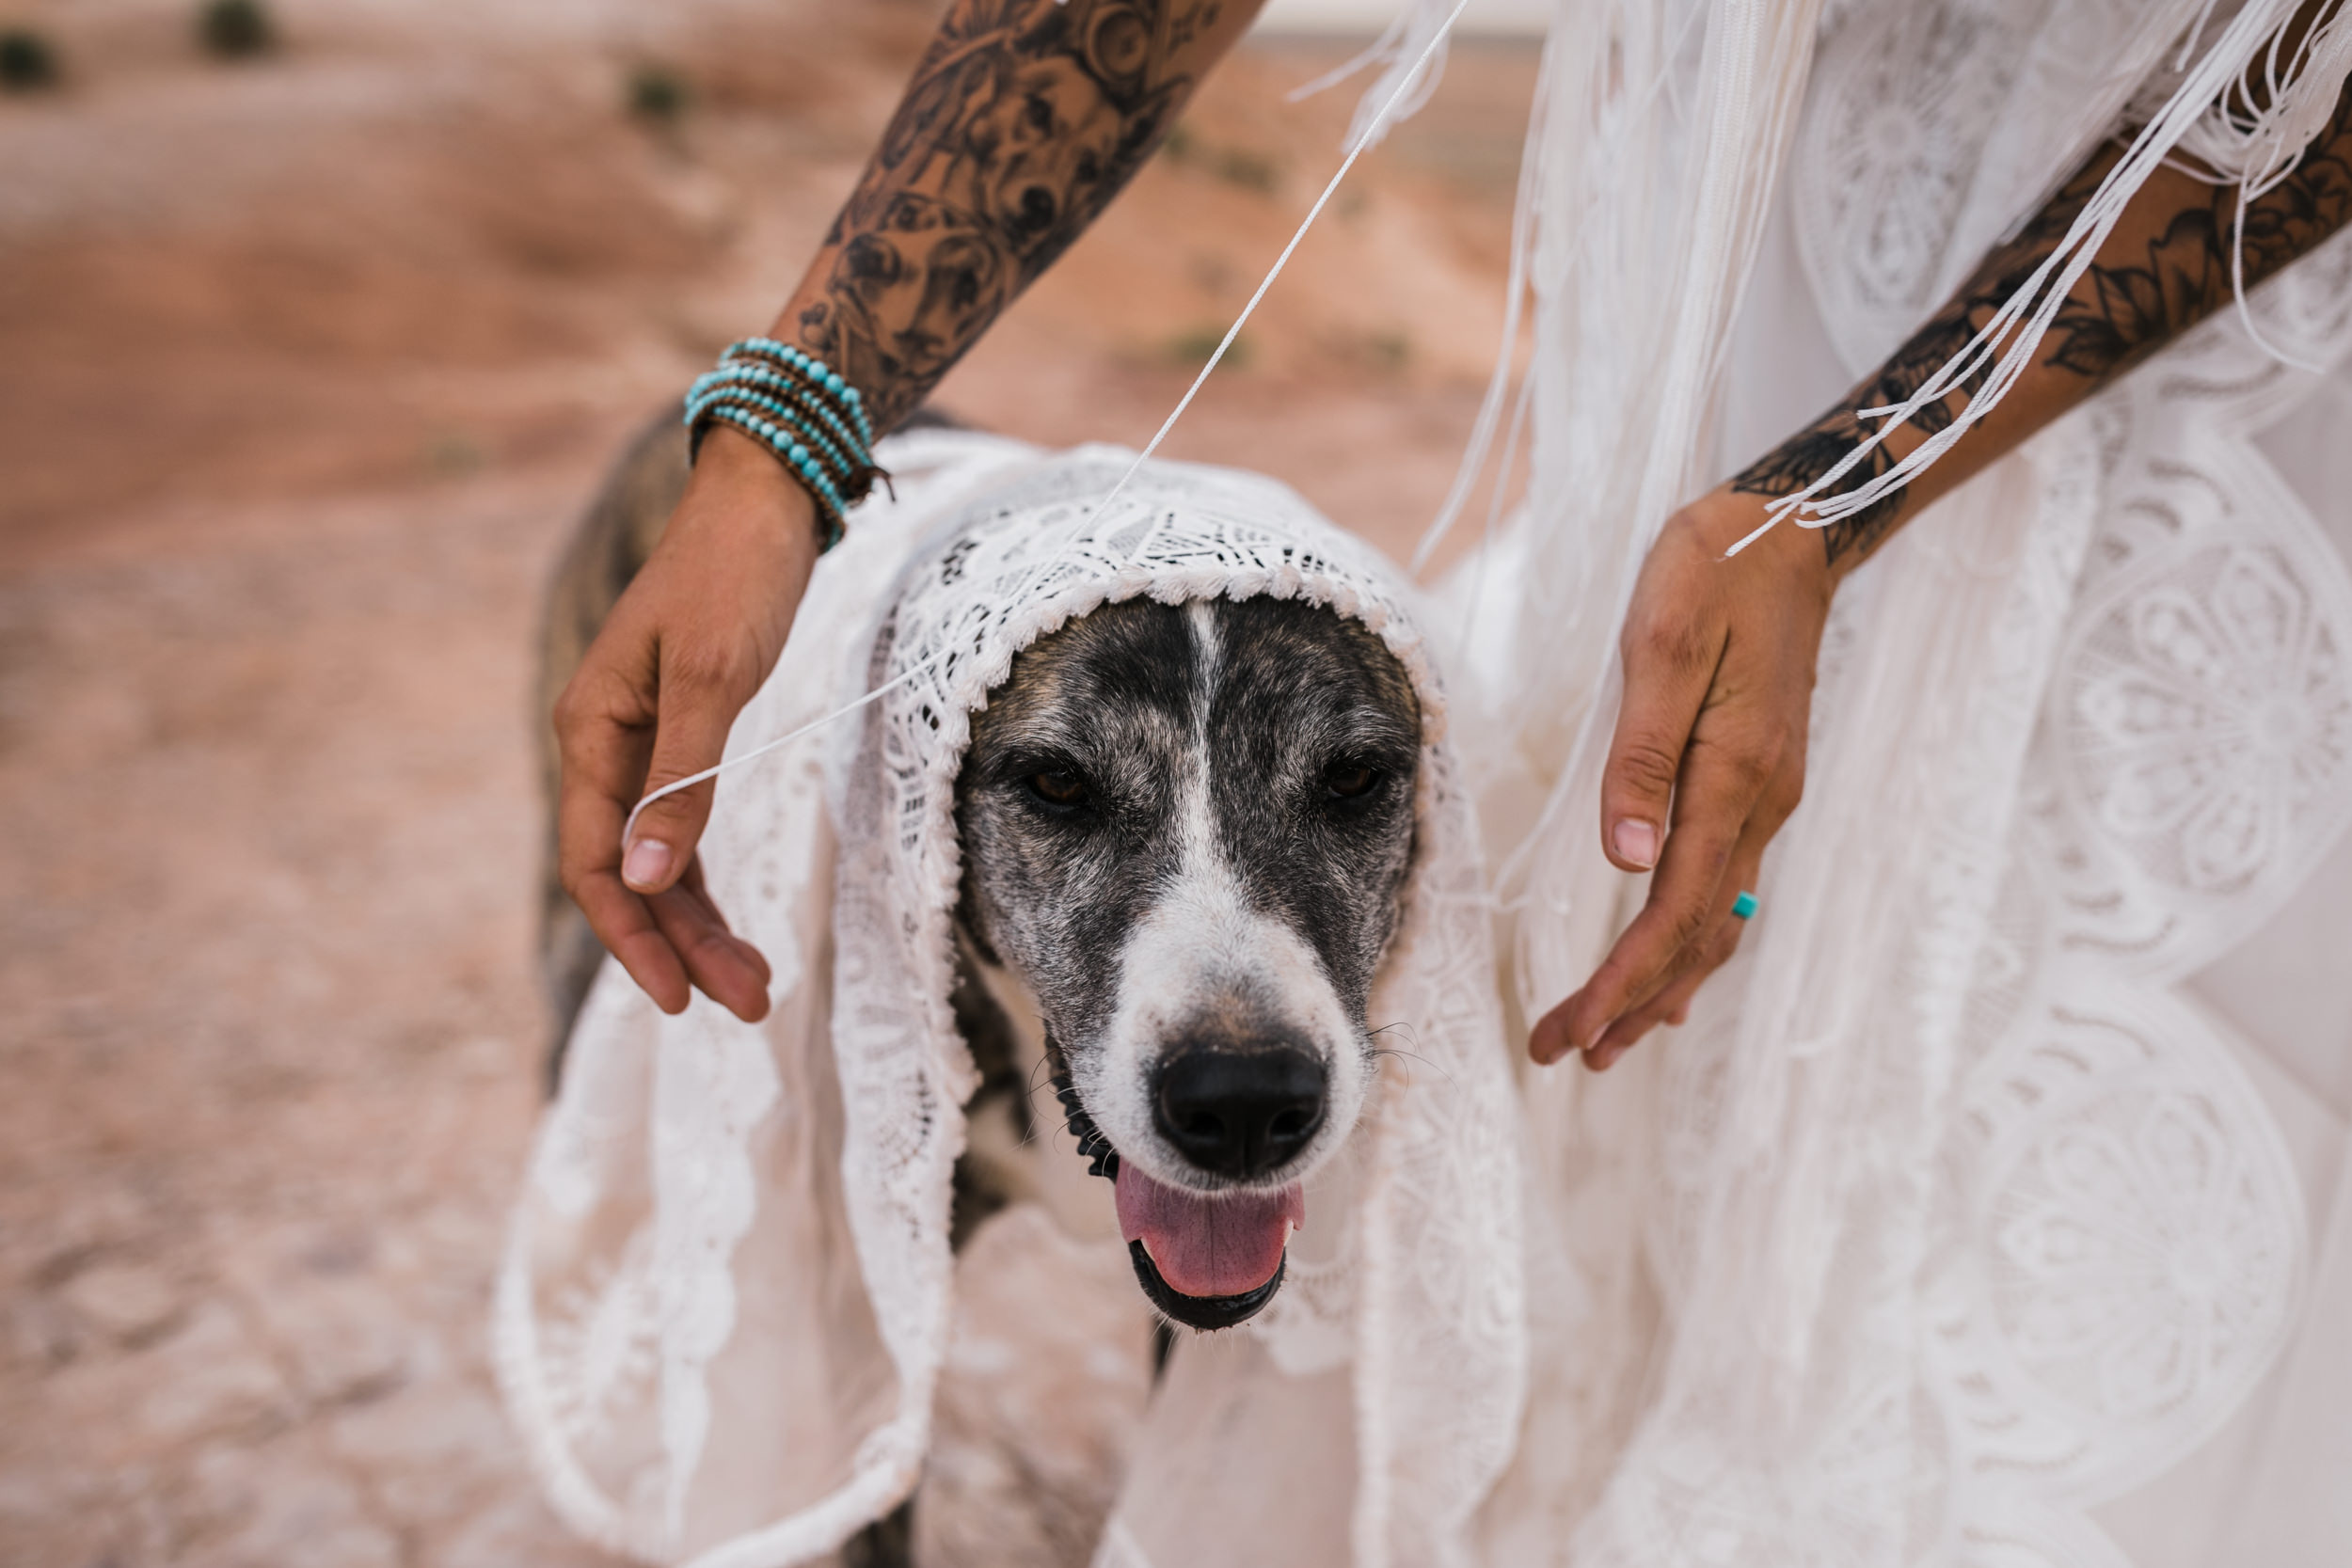 brianna madia rue de seine wedding dress portraits with their dogs bucket and dagwood